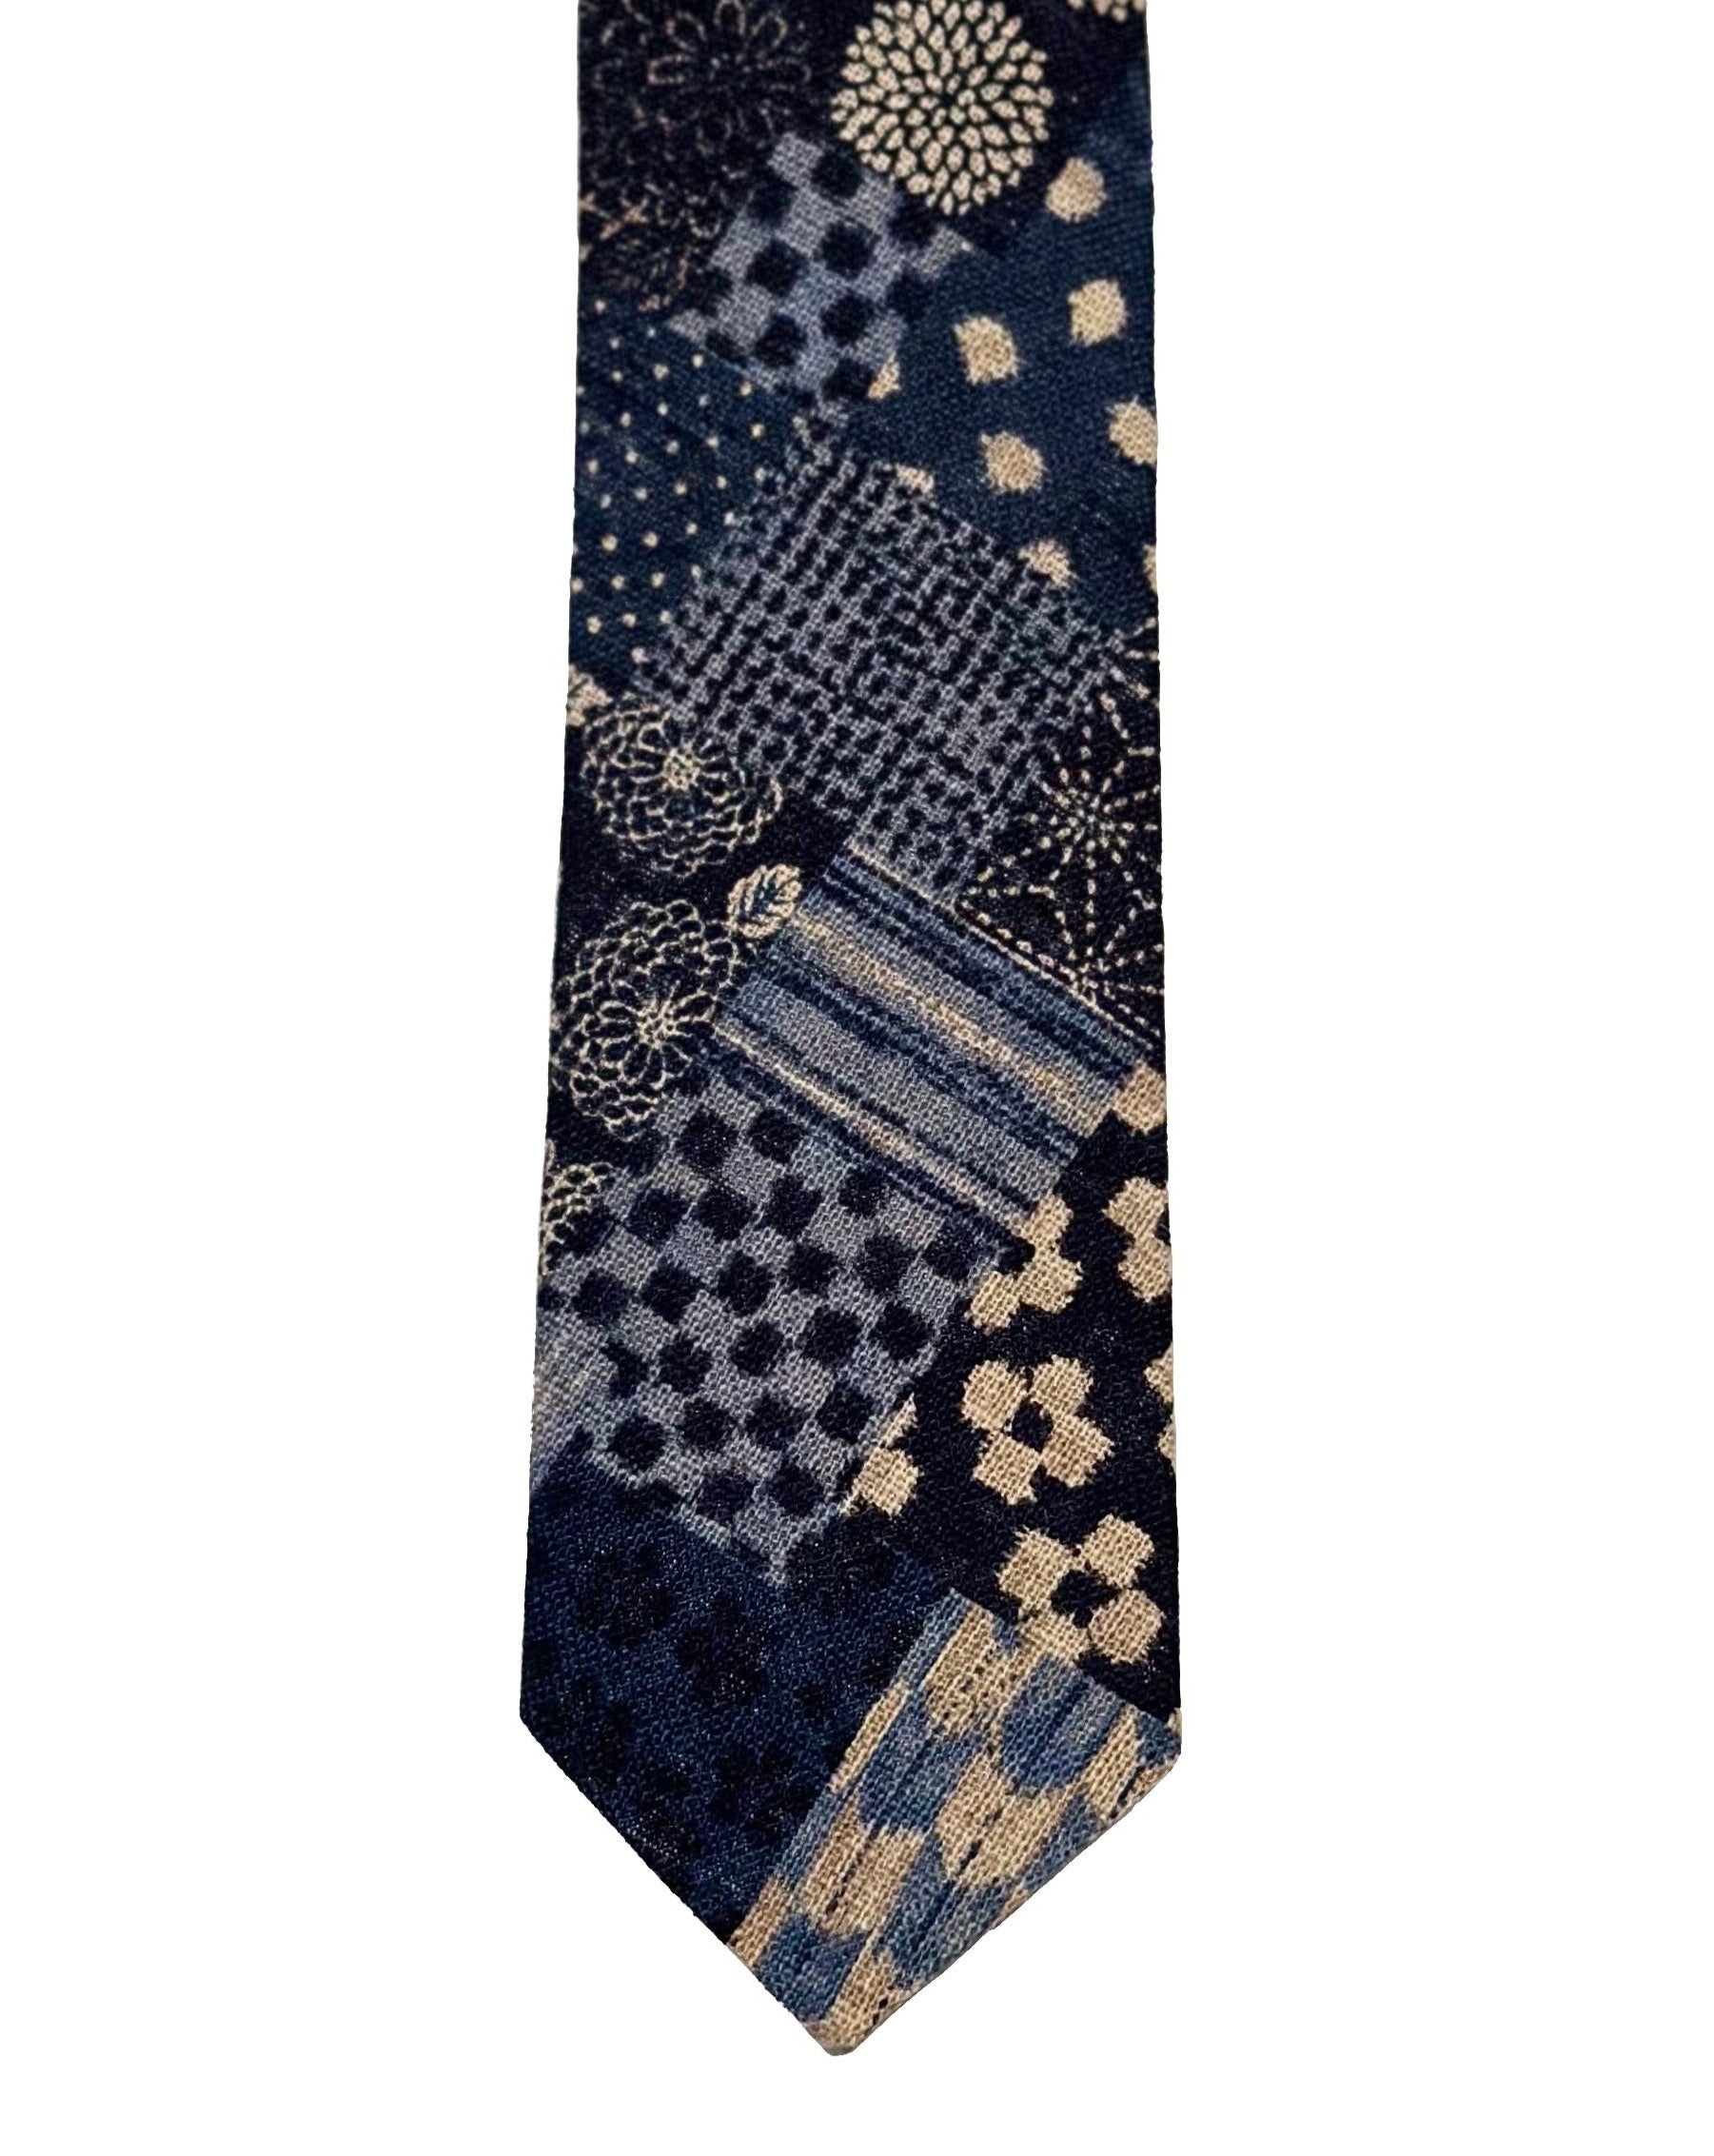 The Tie | Indigo Patchwork